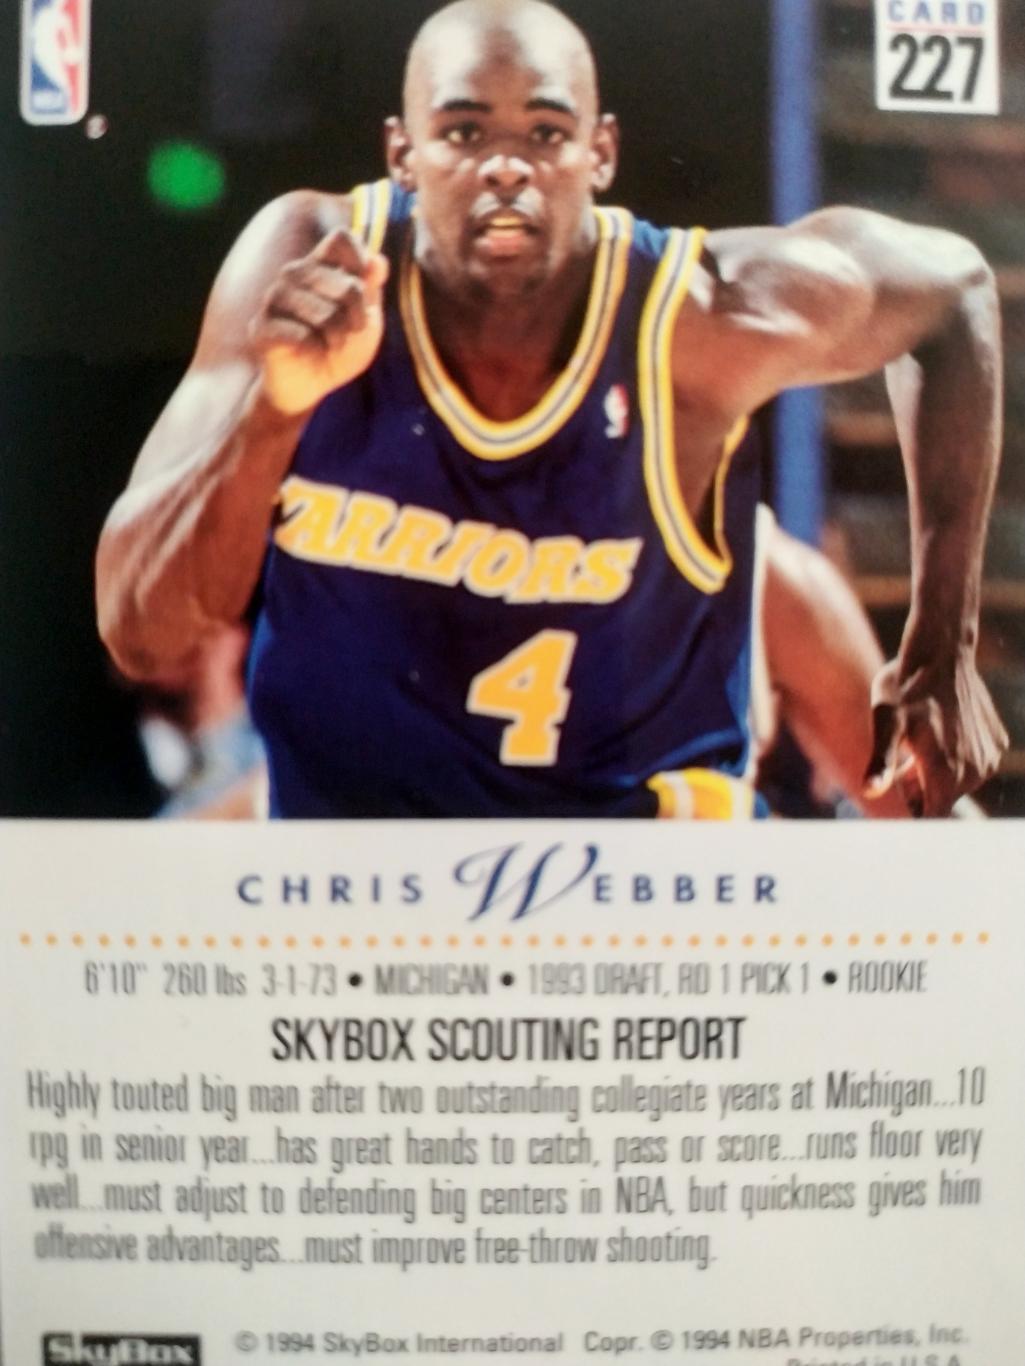 БАСКЕТБОЛ КАРТОЧКА SKYBOX PREMIUM 1994 NBA CHRIS WEBBER ROOKIE CARD #227 1